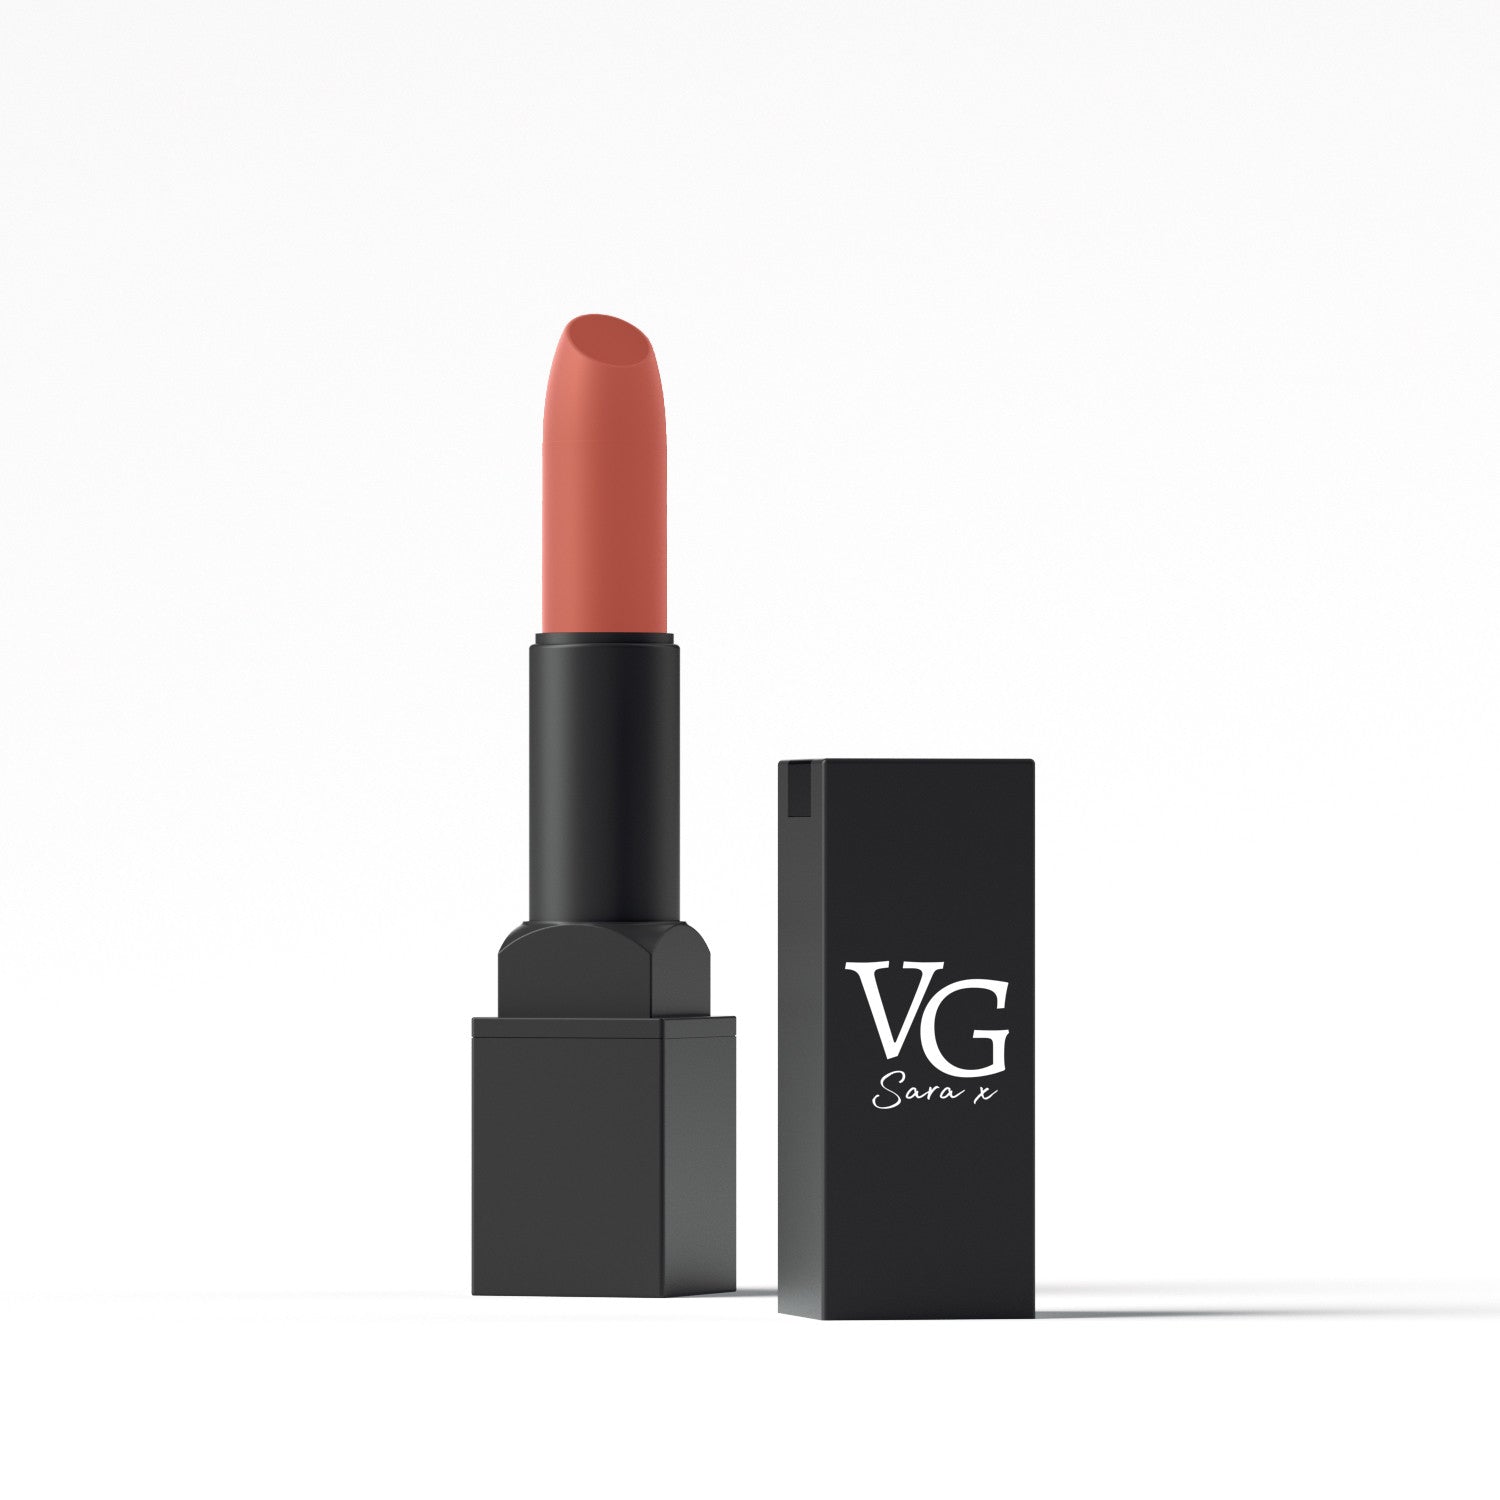 Vitamin E enriched VG lipstick in elegant packaging